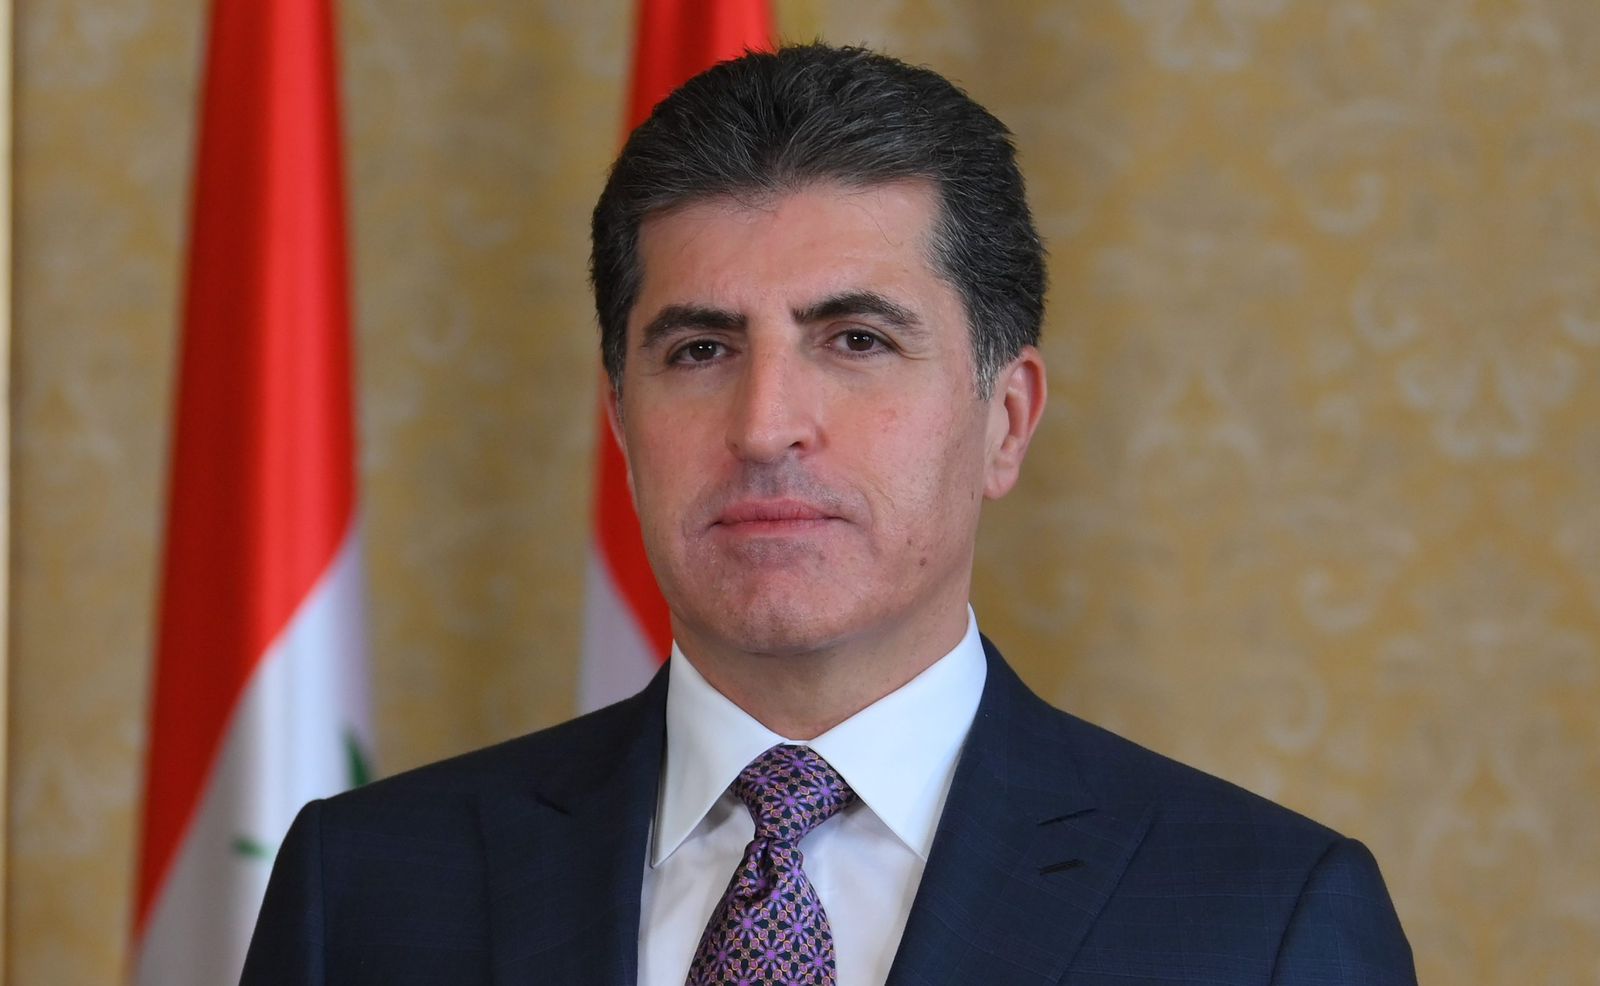 President of Kurdistan Region Emphasizes Religious Pluralism and Coexistence